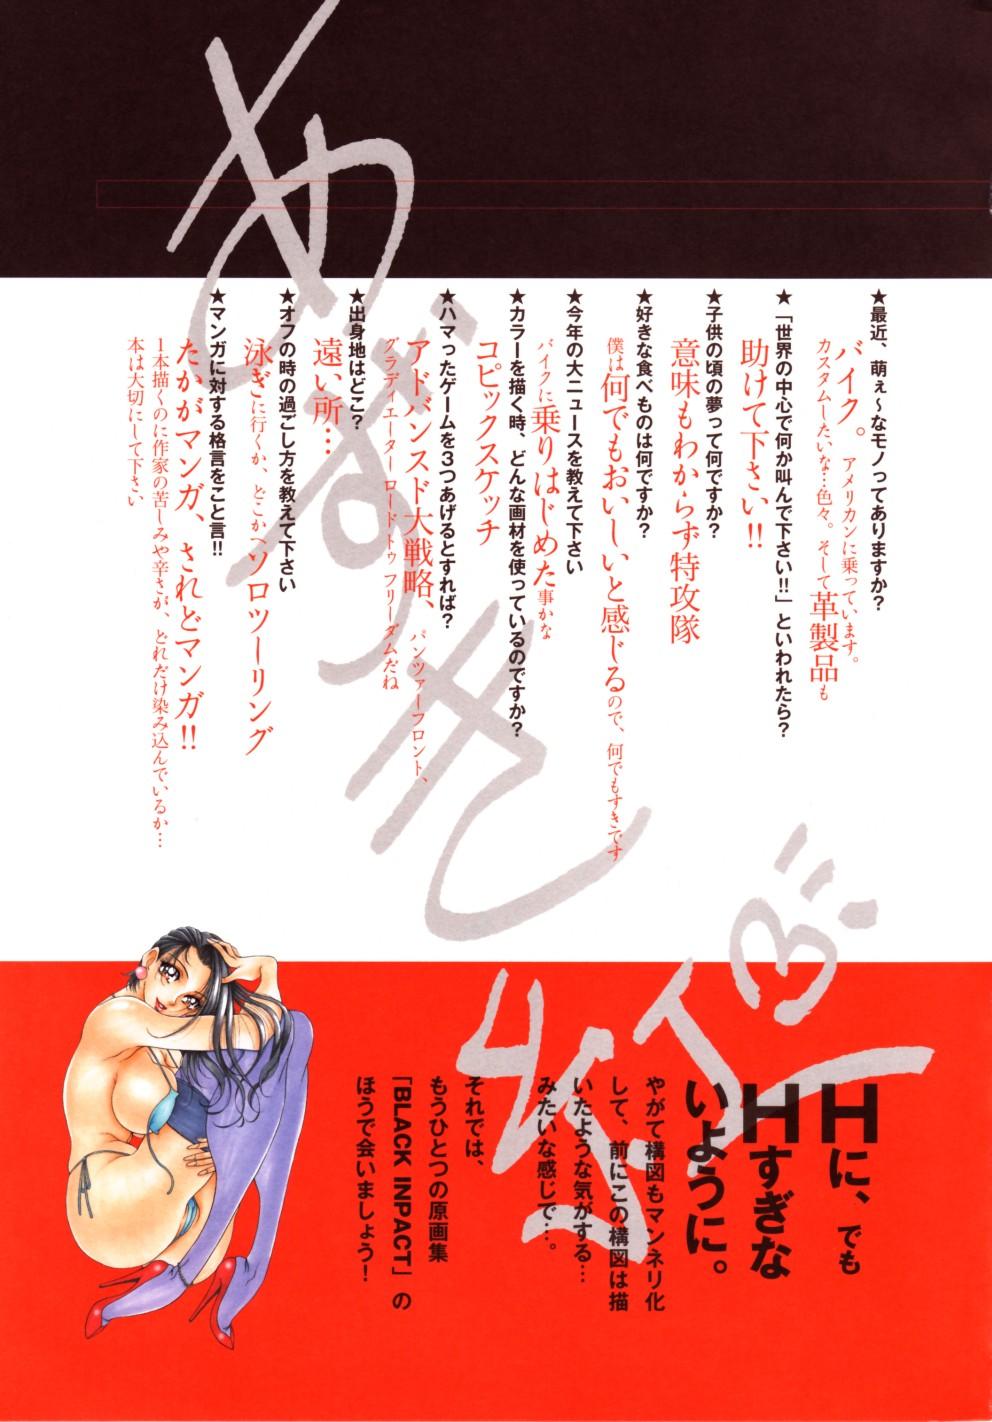 RED IMPACT Azuki Kurenai Genga & Fan Book 111